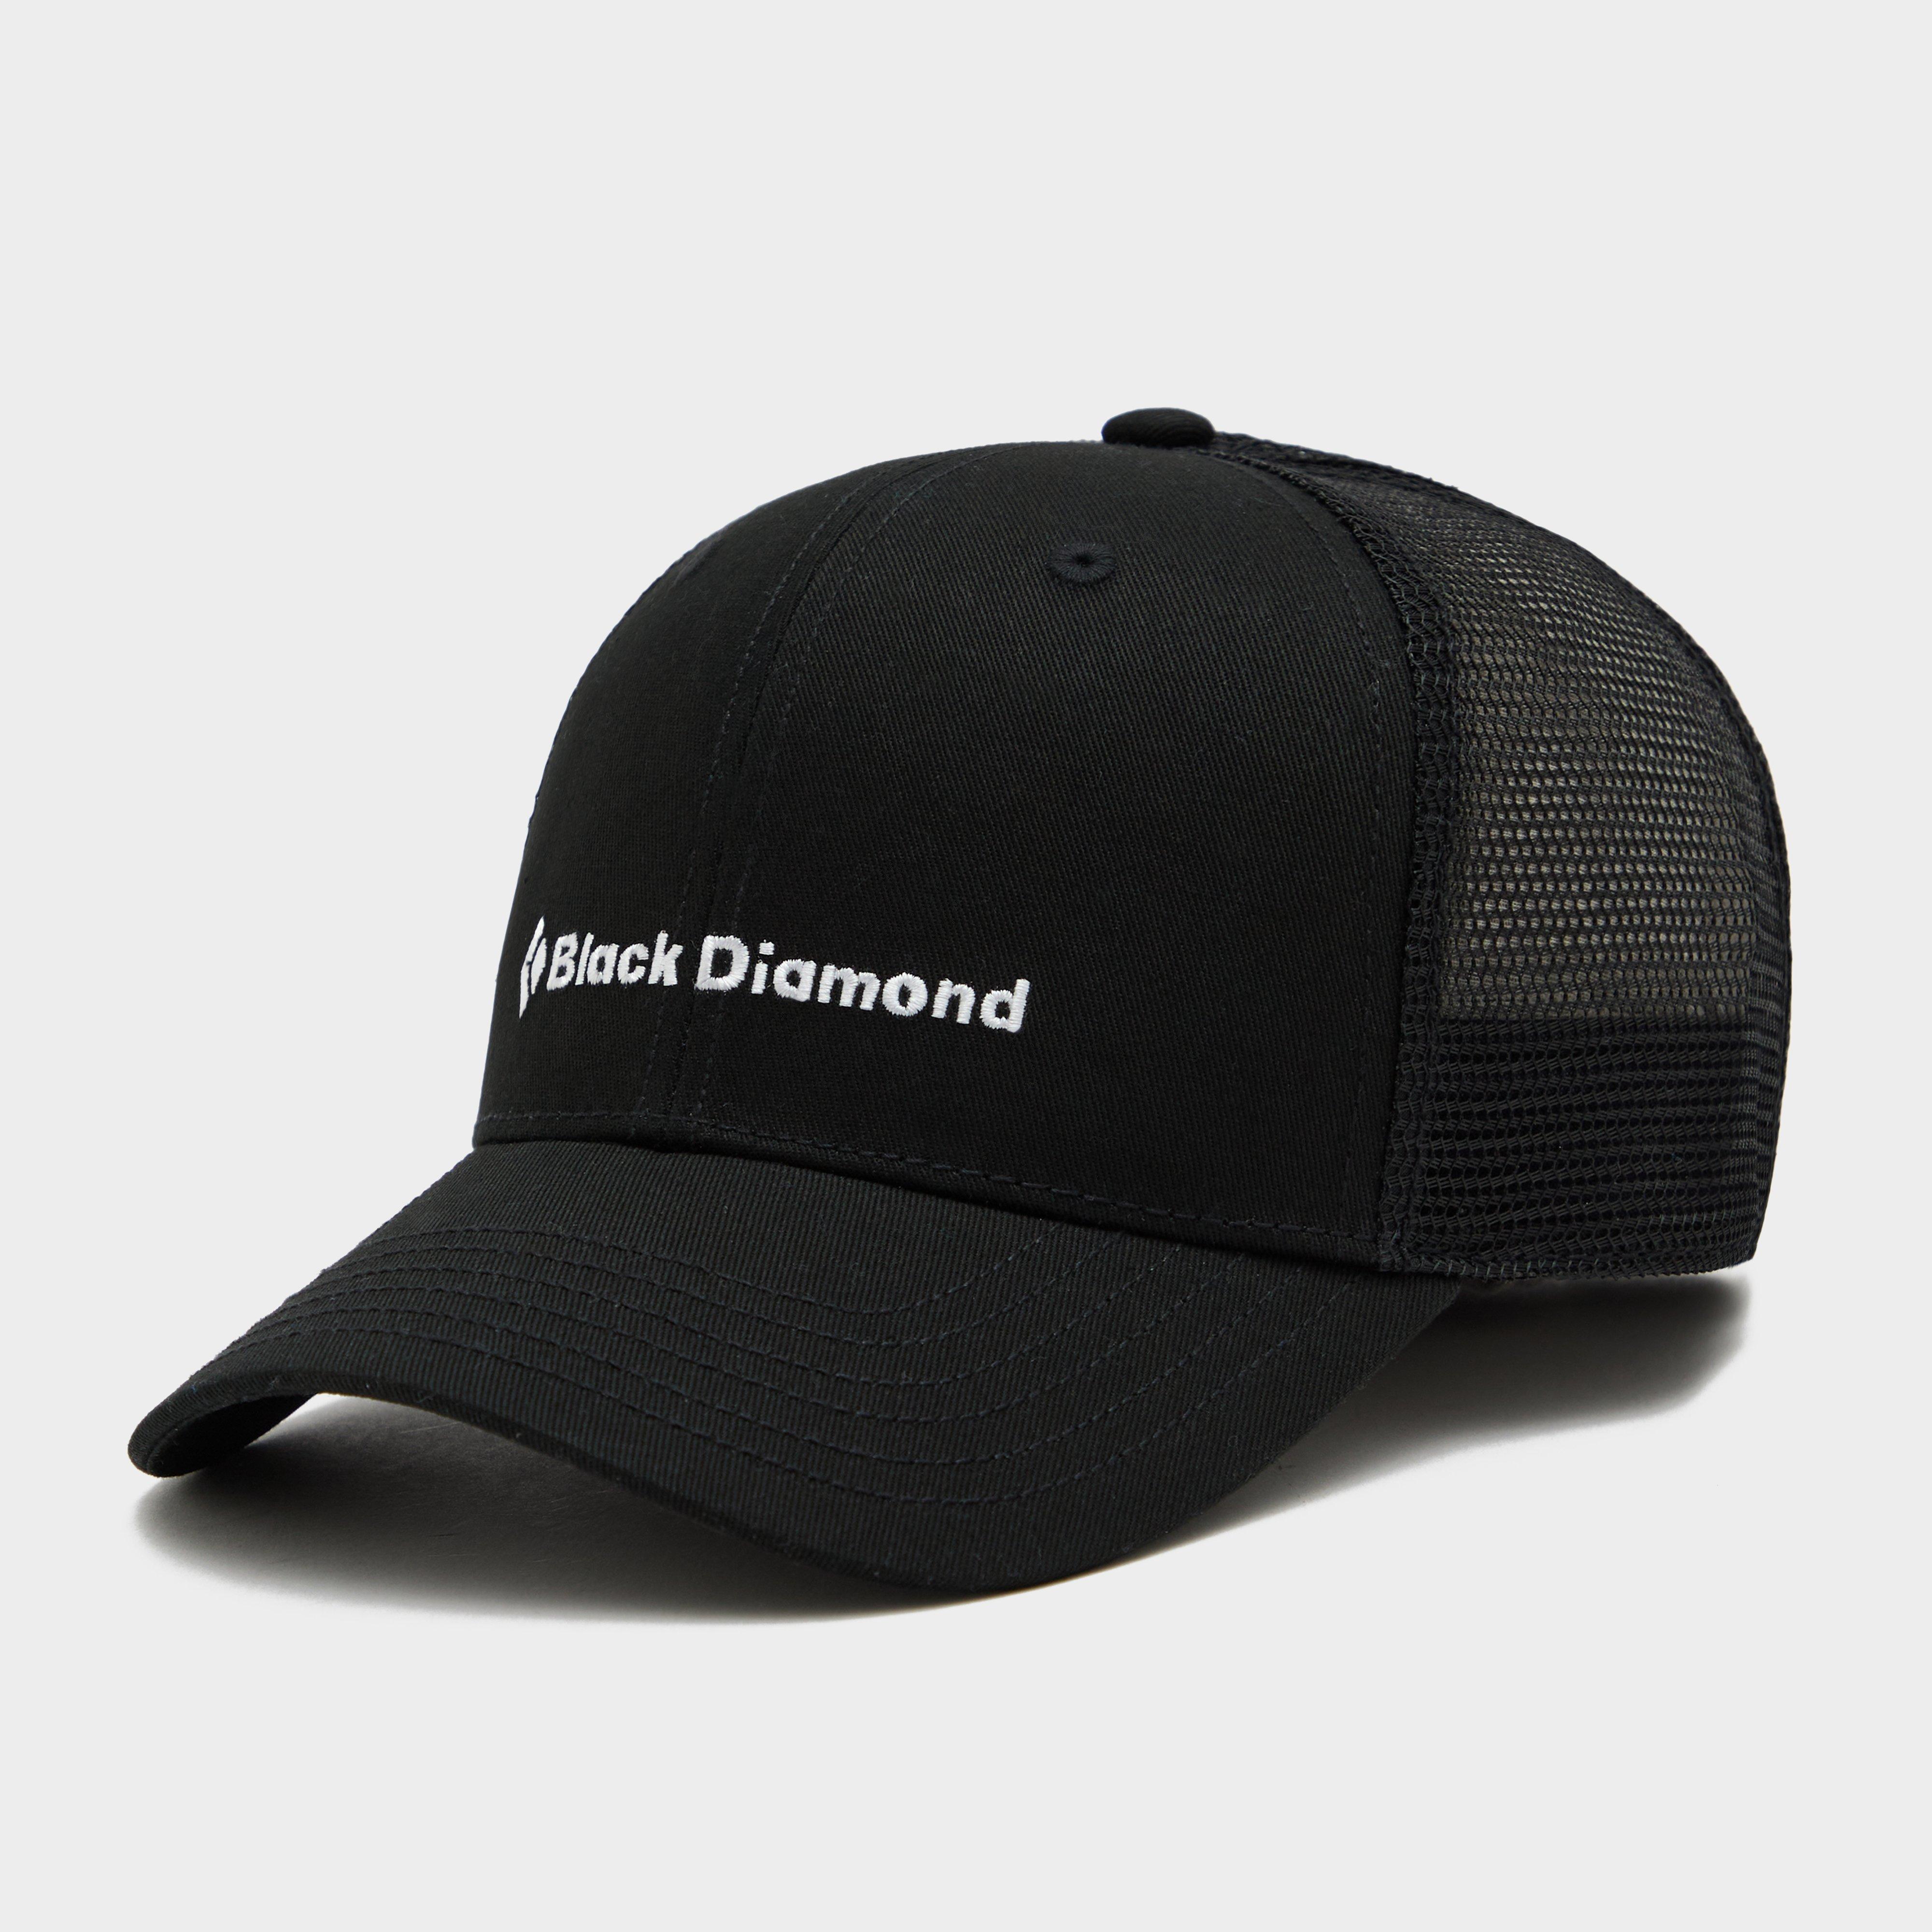 Black Diamond Black Diamond Trucker Cap, Black